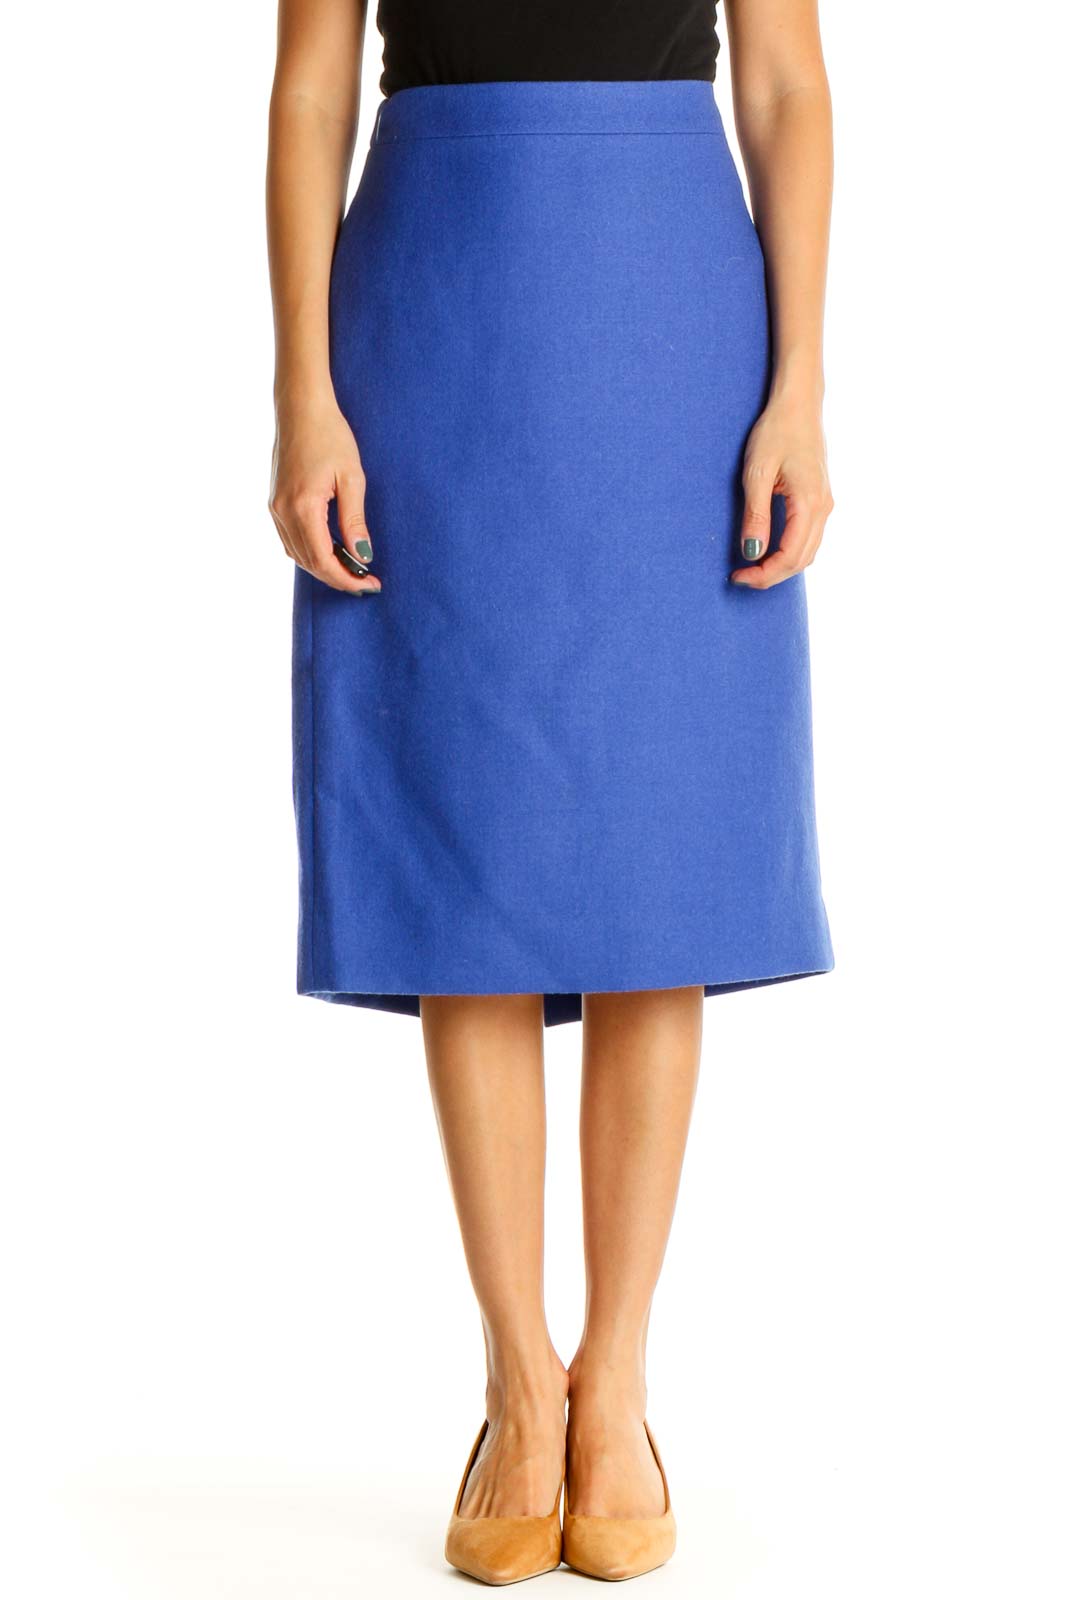 Blue Retro Pencil Skirt Front